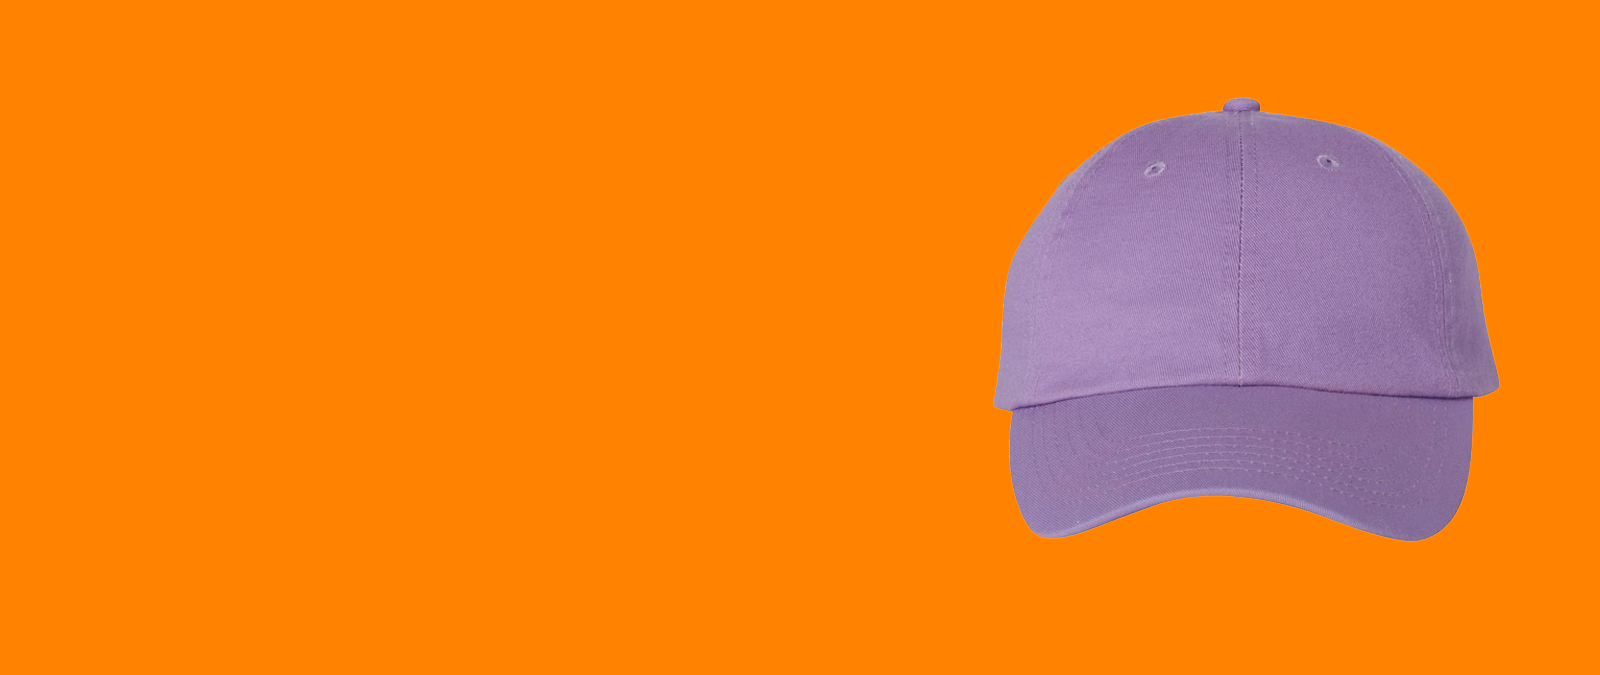 Purple baseball hats on an orange background.